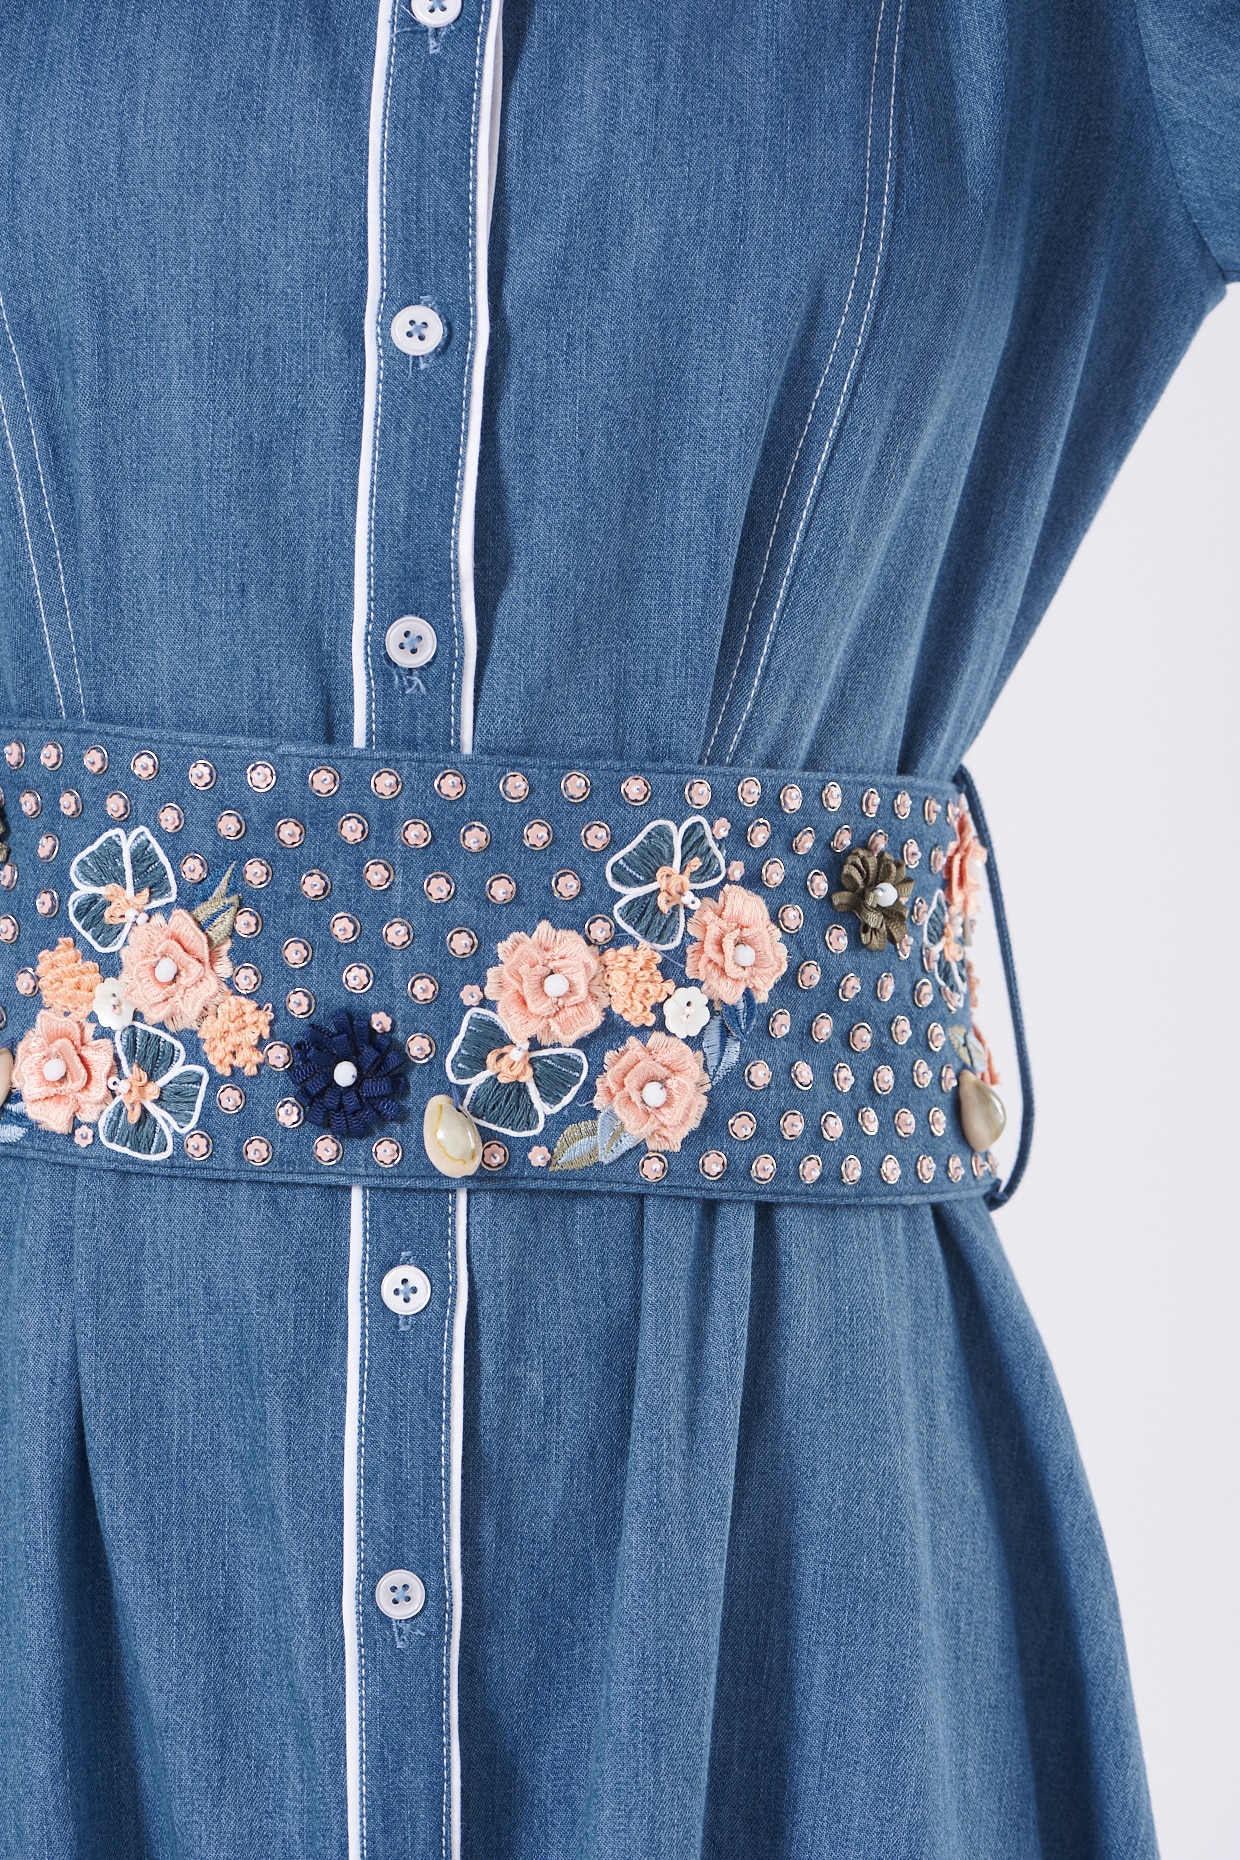 Joe Browns Women's Zip Through Long Sleeve Mid Wash Denim Dress, Blue, 6 :  Amazon.co.uk: Fashion